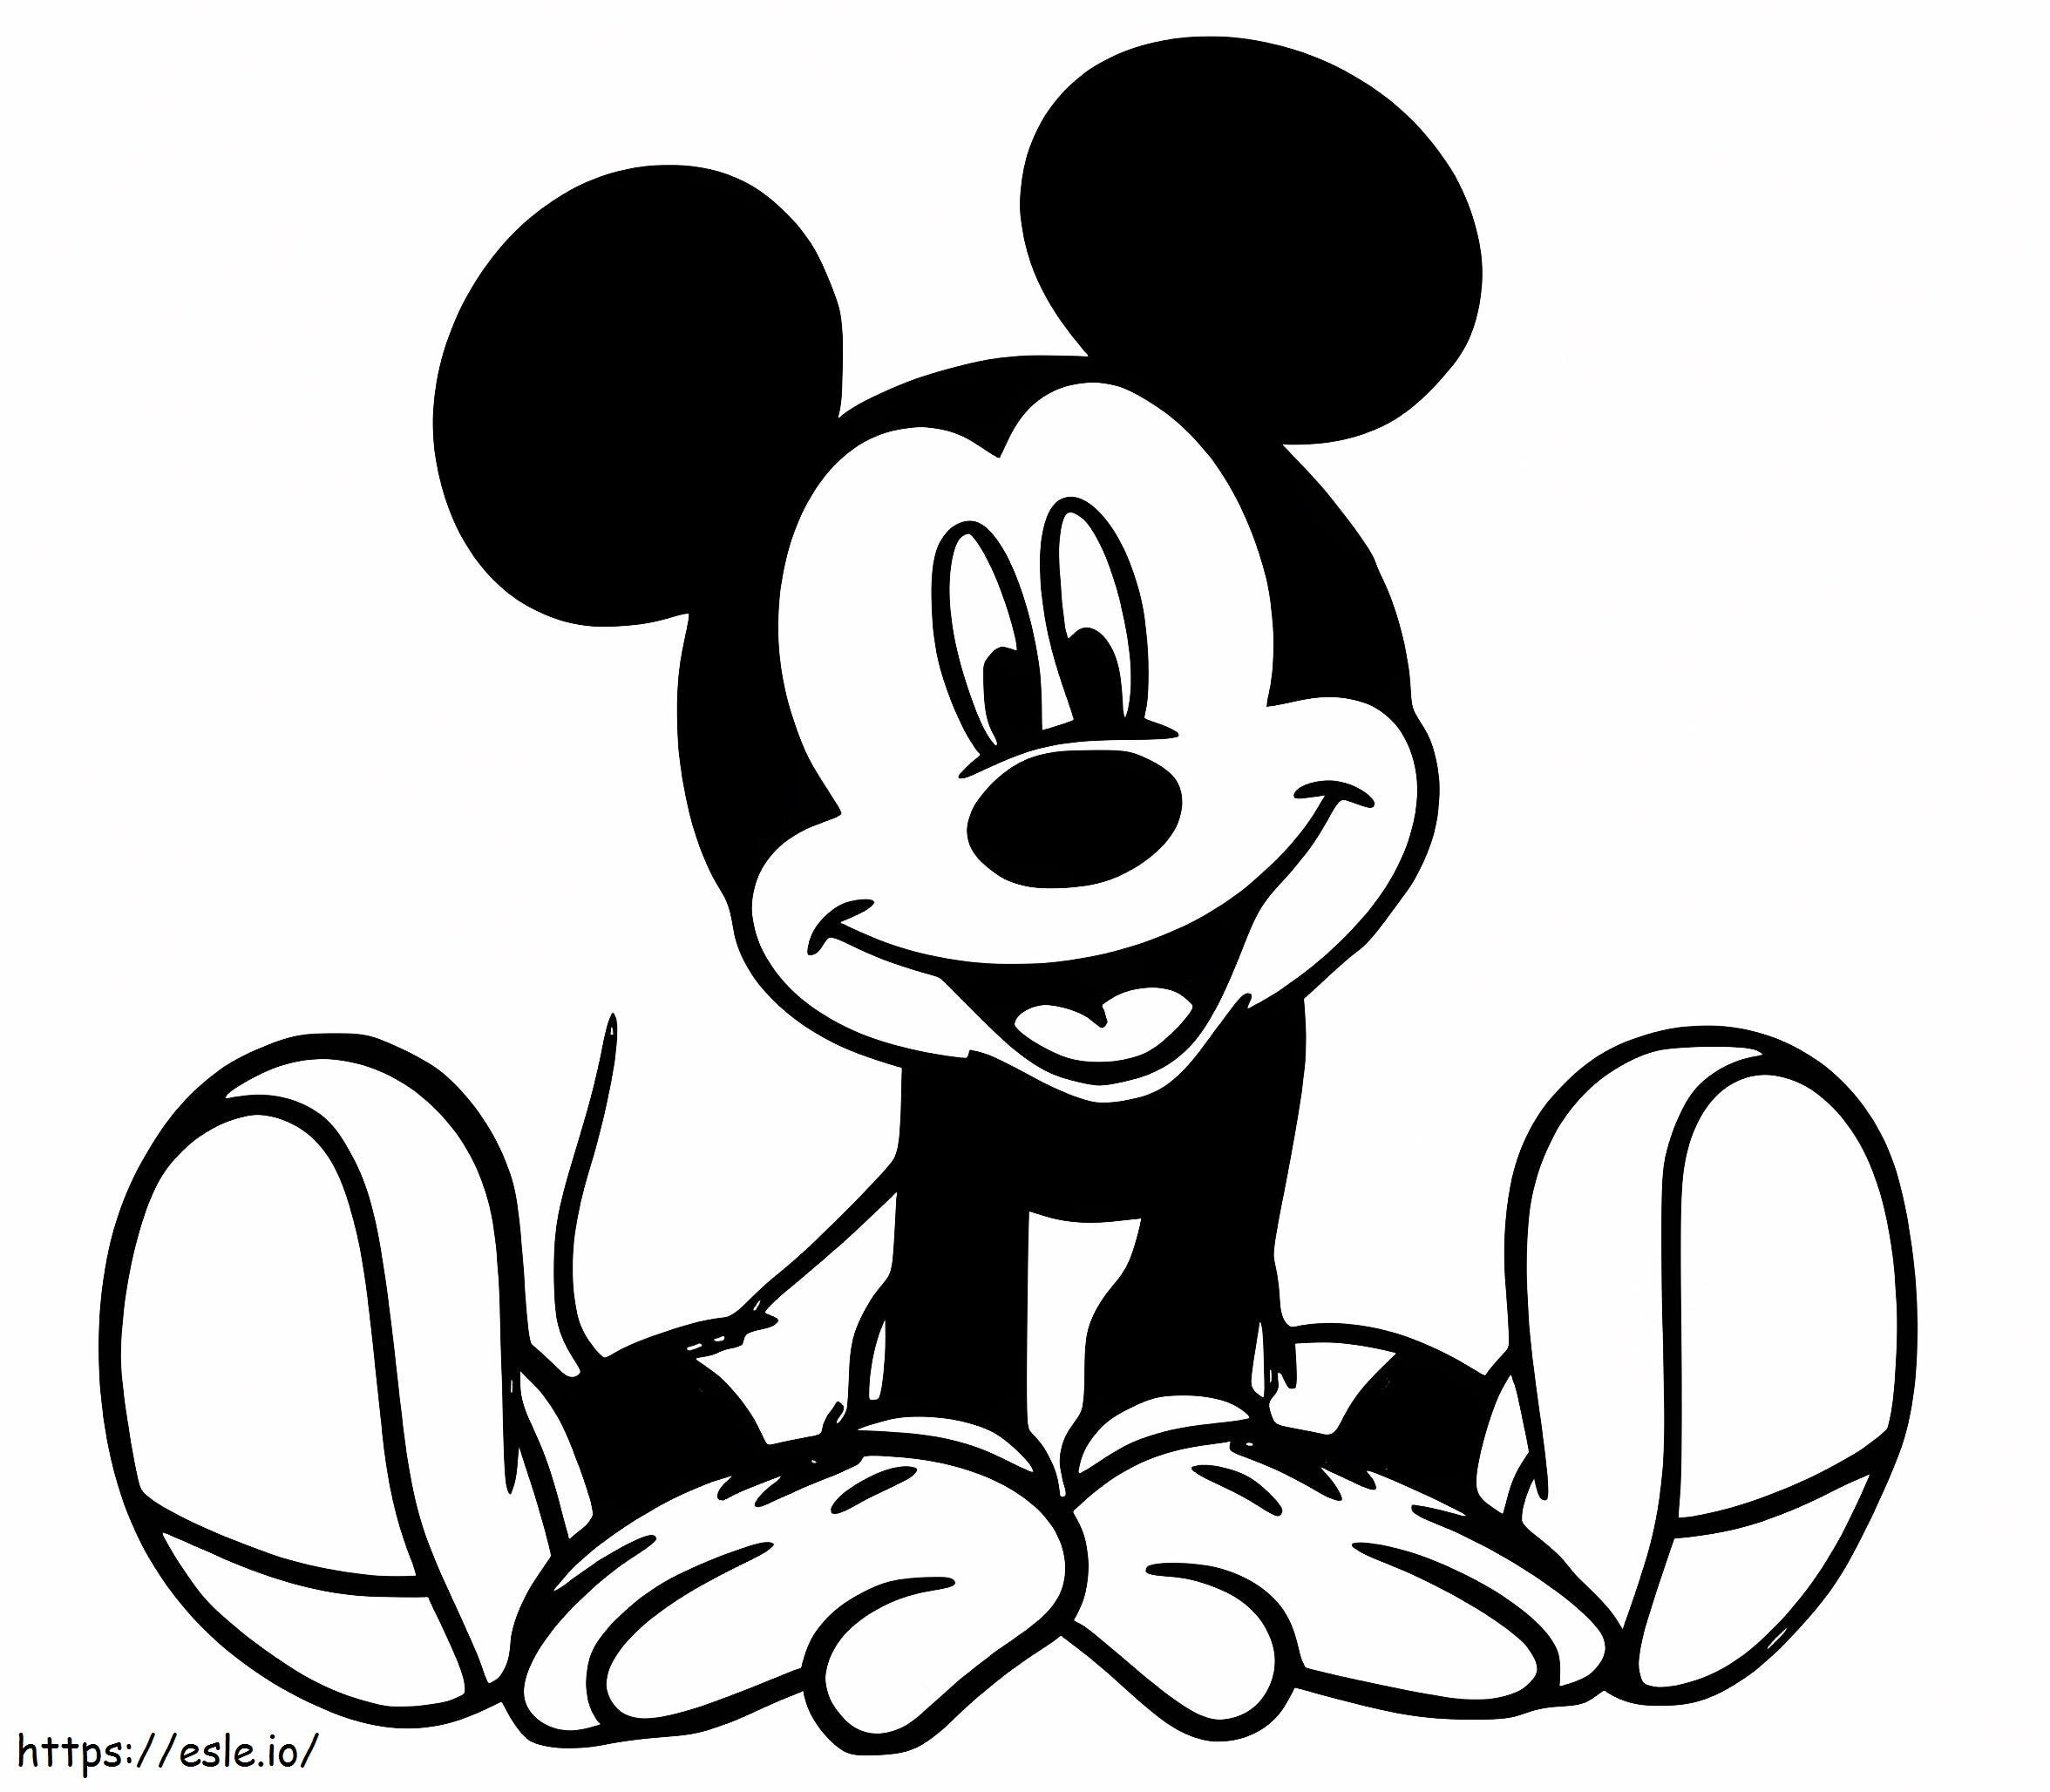  Mickey Mouse lächelnd A4 ausmalbilder